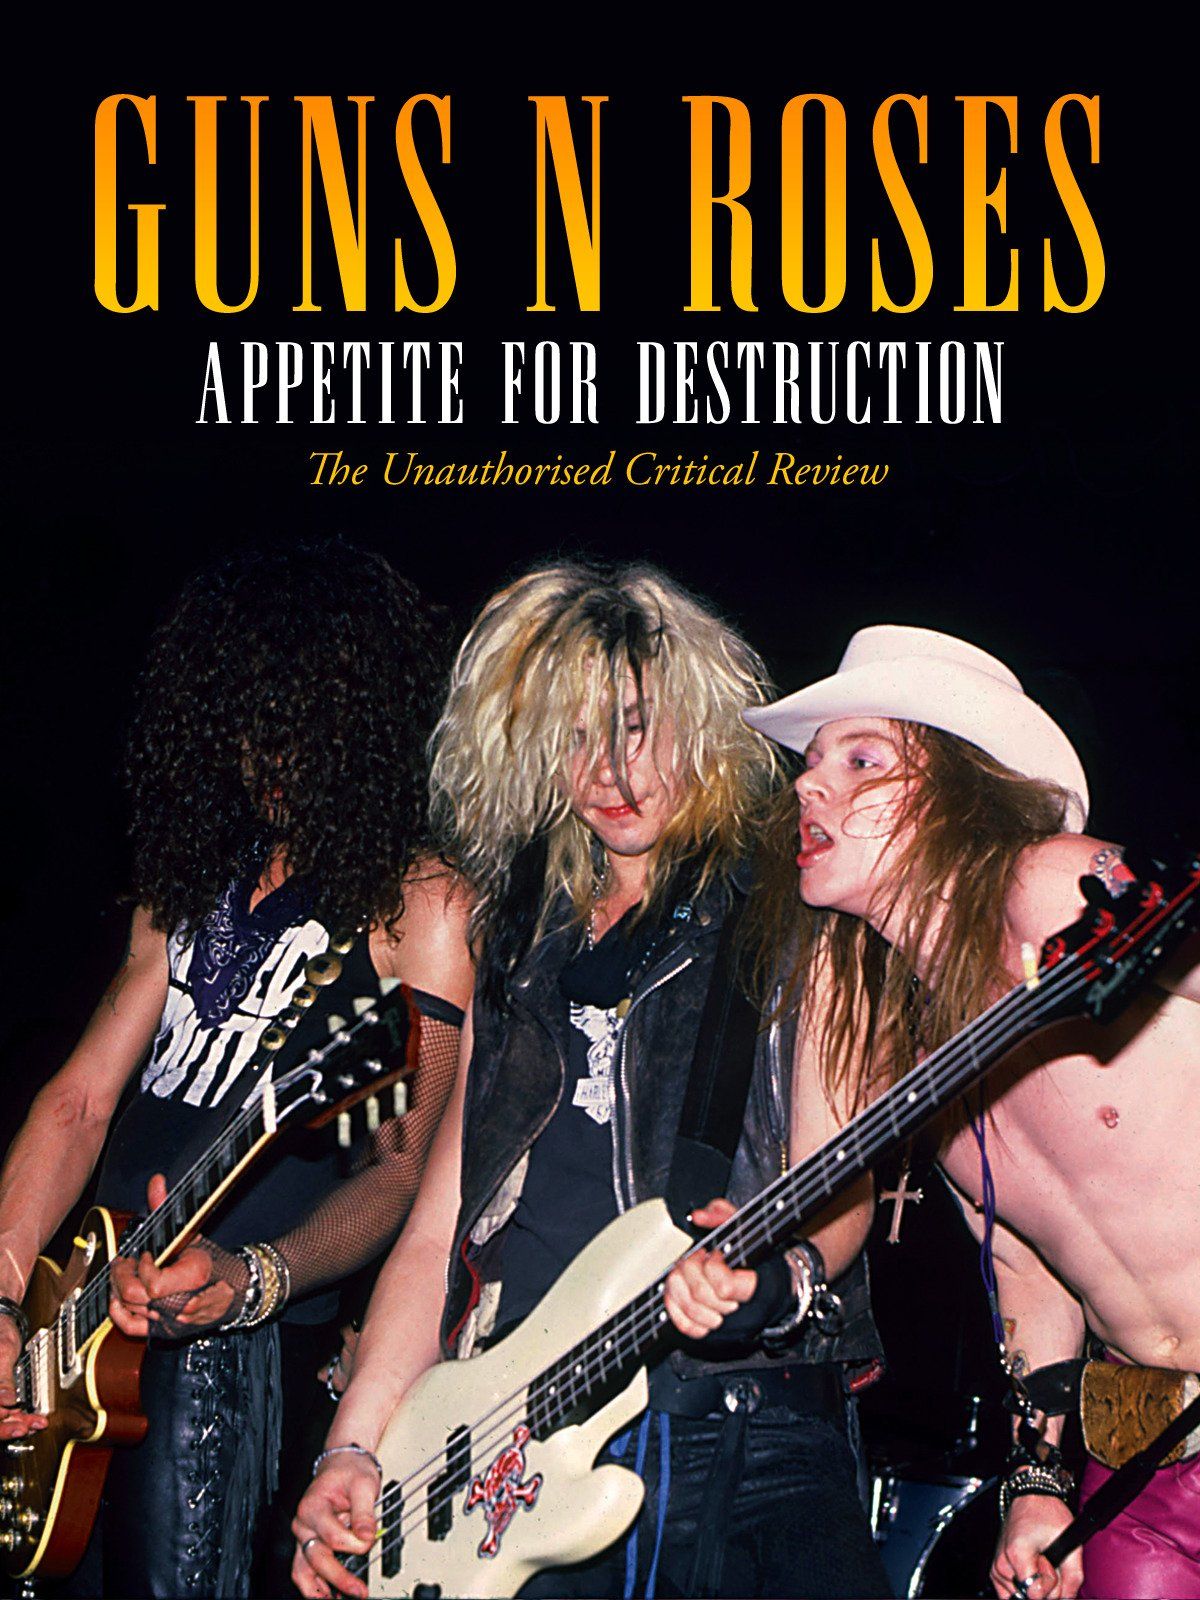 Watch Guns 'n' Roses for Destruction